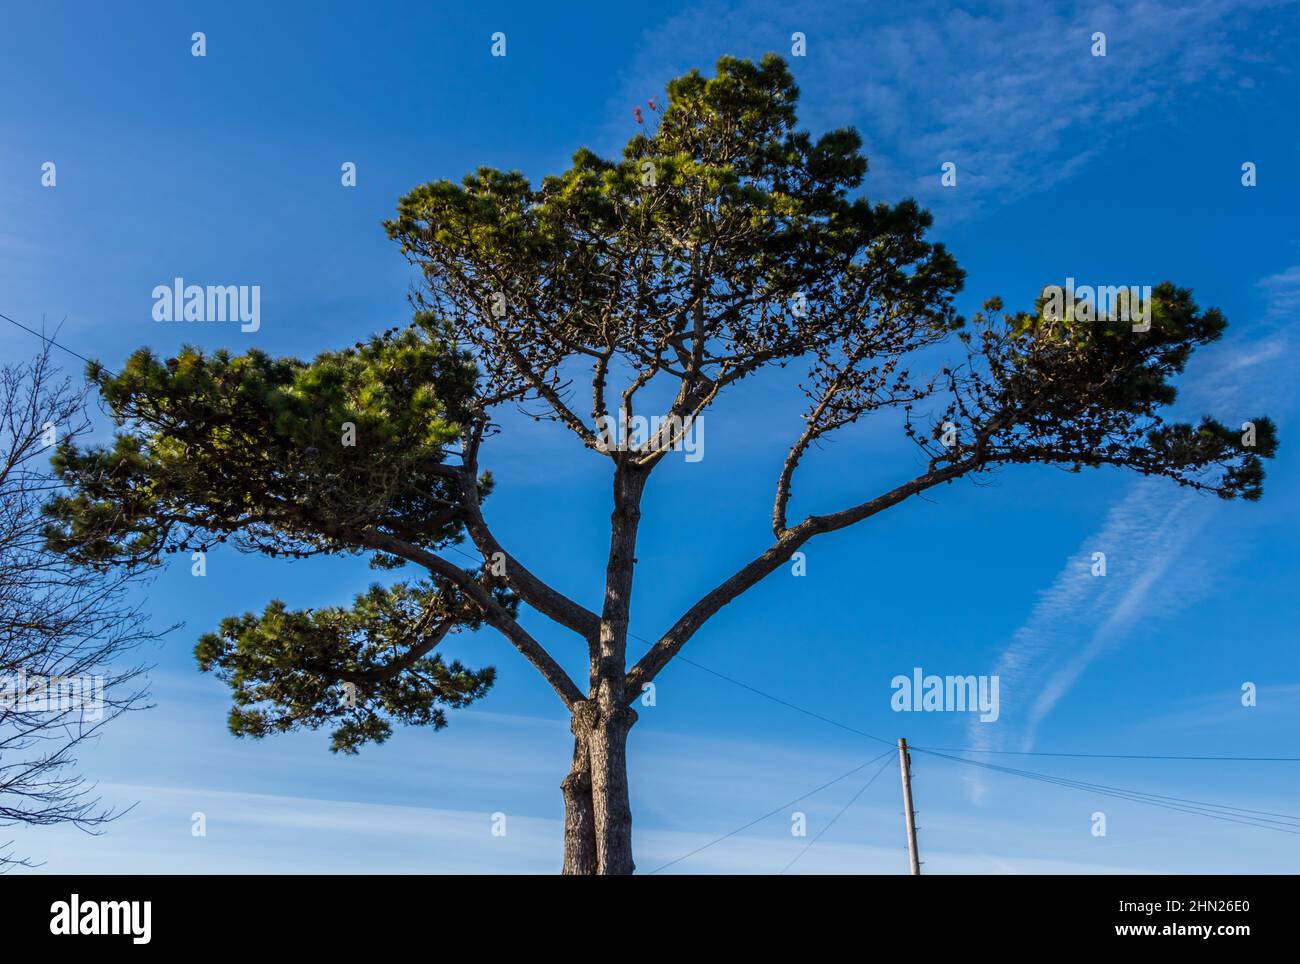 A fir tree against a blue sky near Bognor Regis, West Sussex, UK. Stock Photo